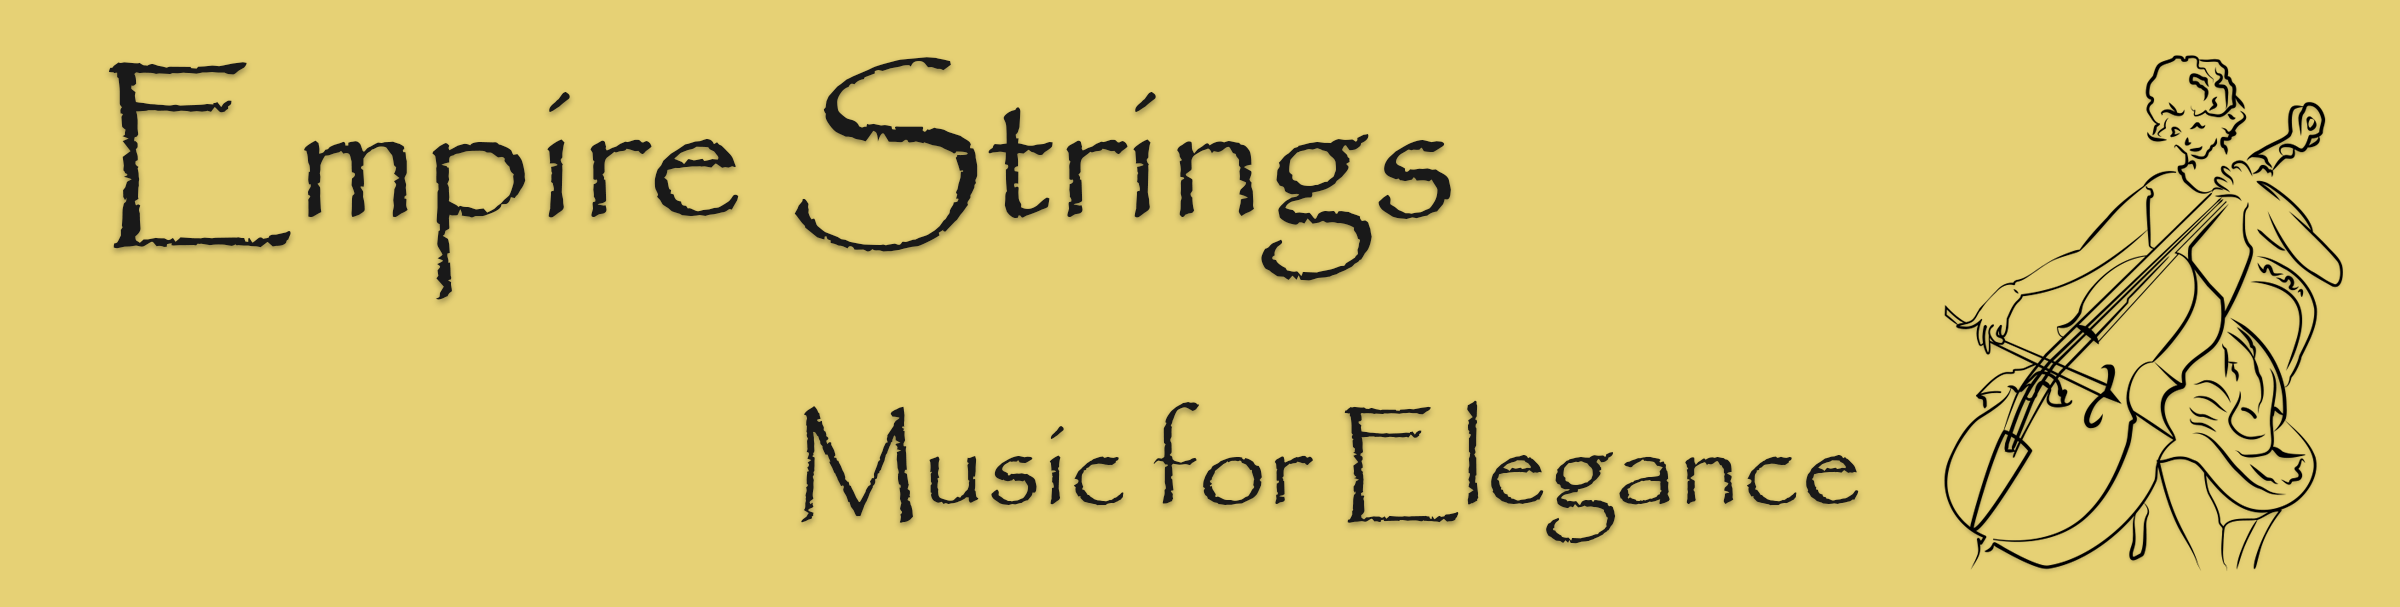 Empire Strings